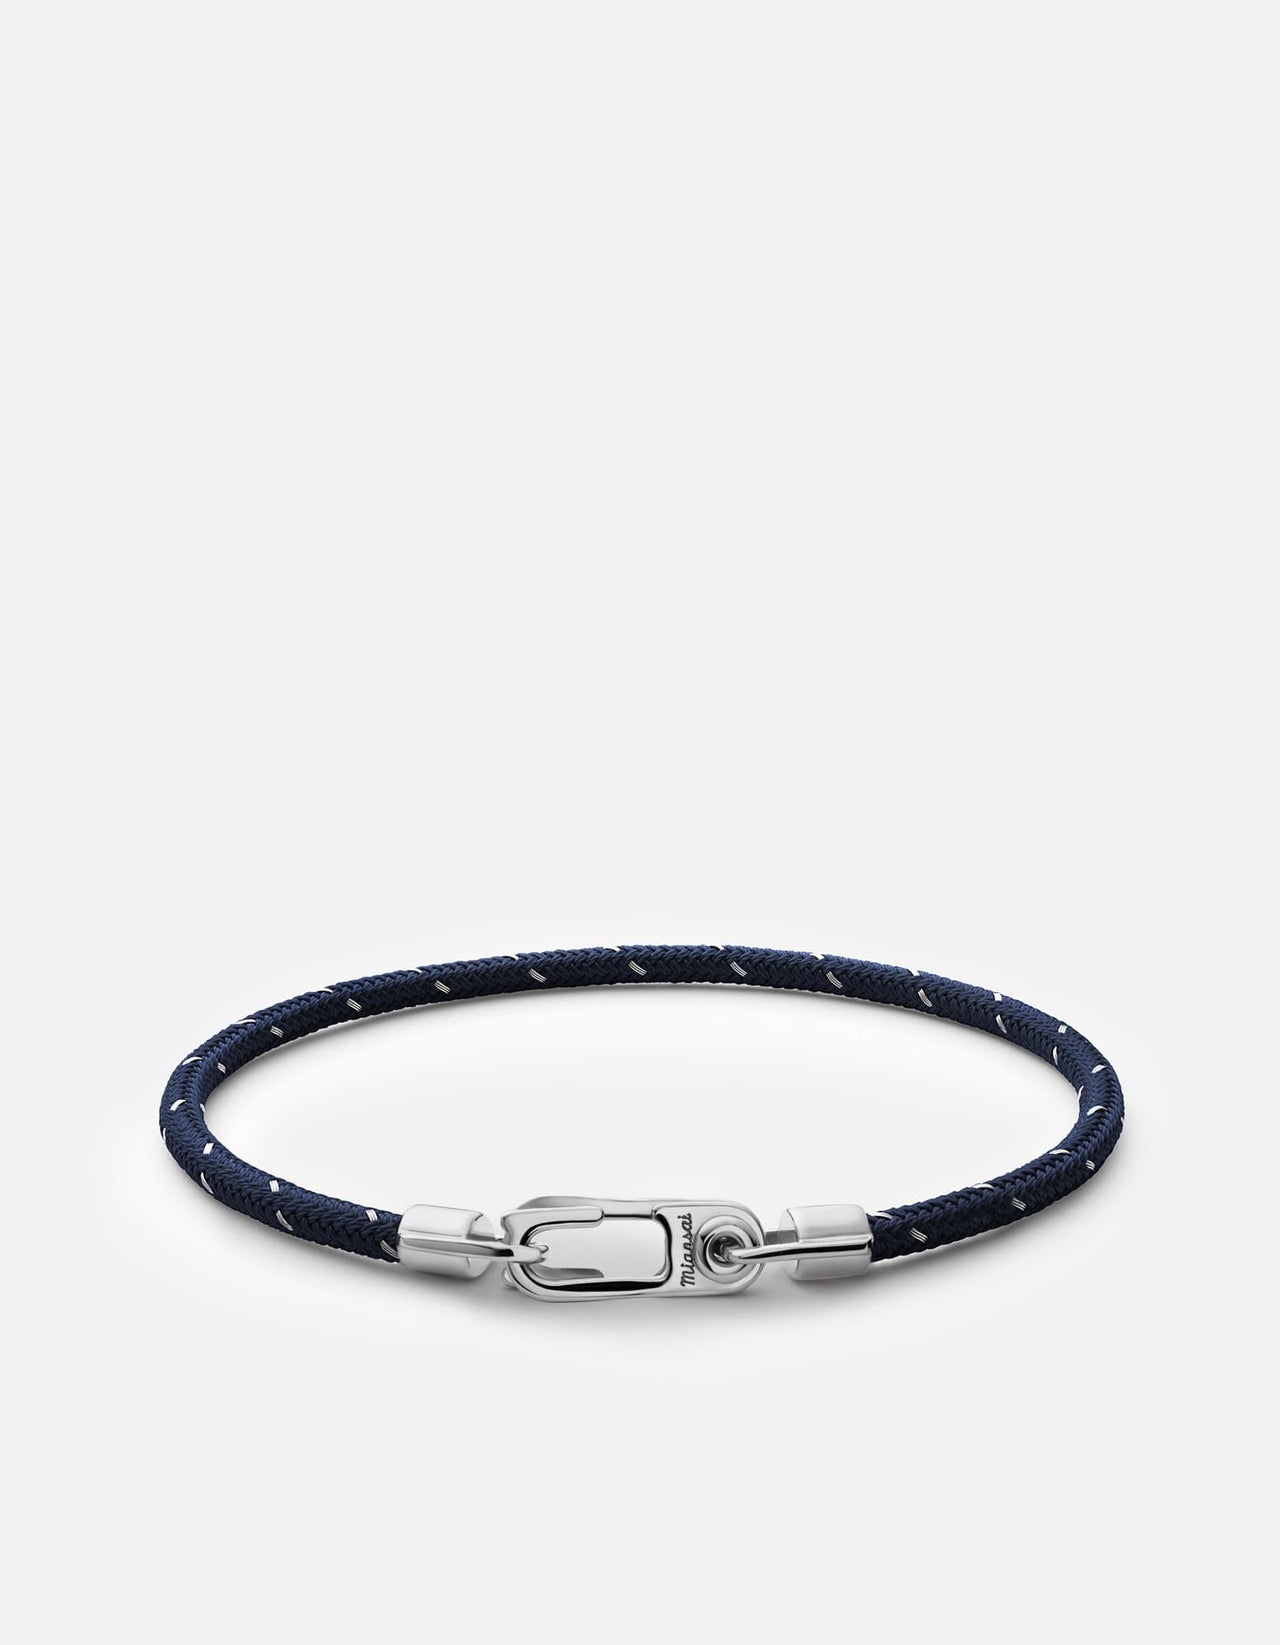 Annex Rope Bracelet, Sterling Silver | Men's Bracelets | Miansai